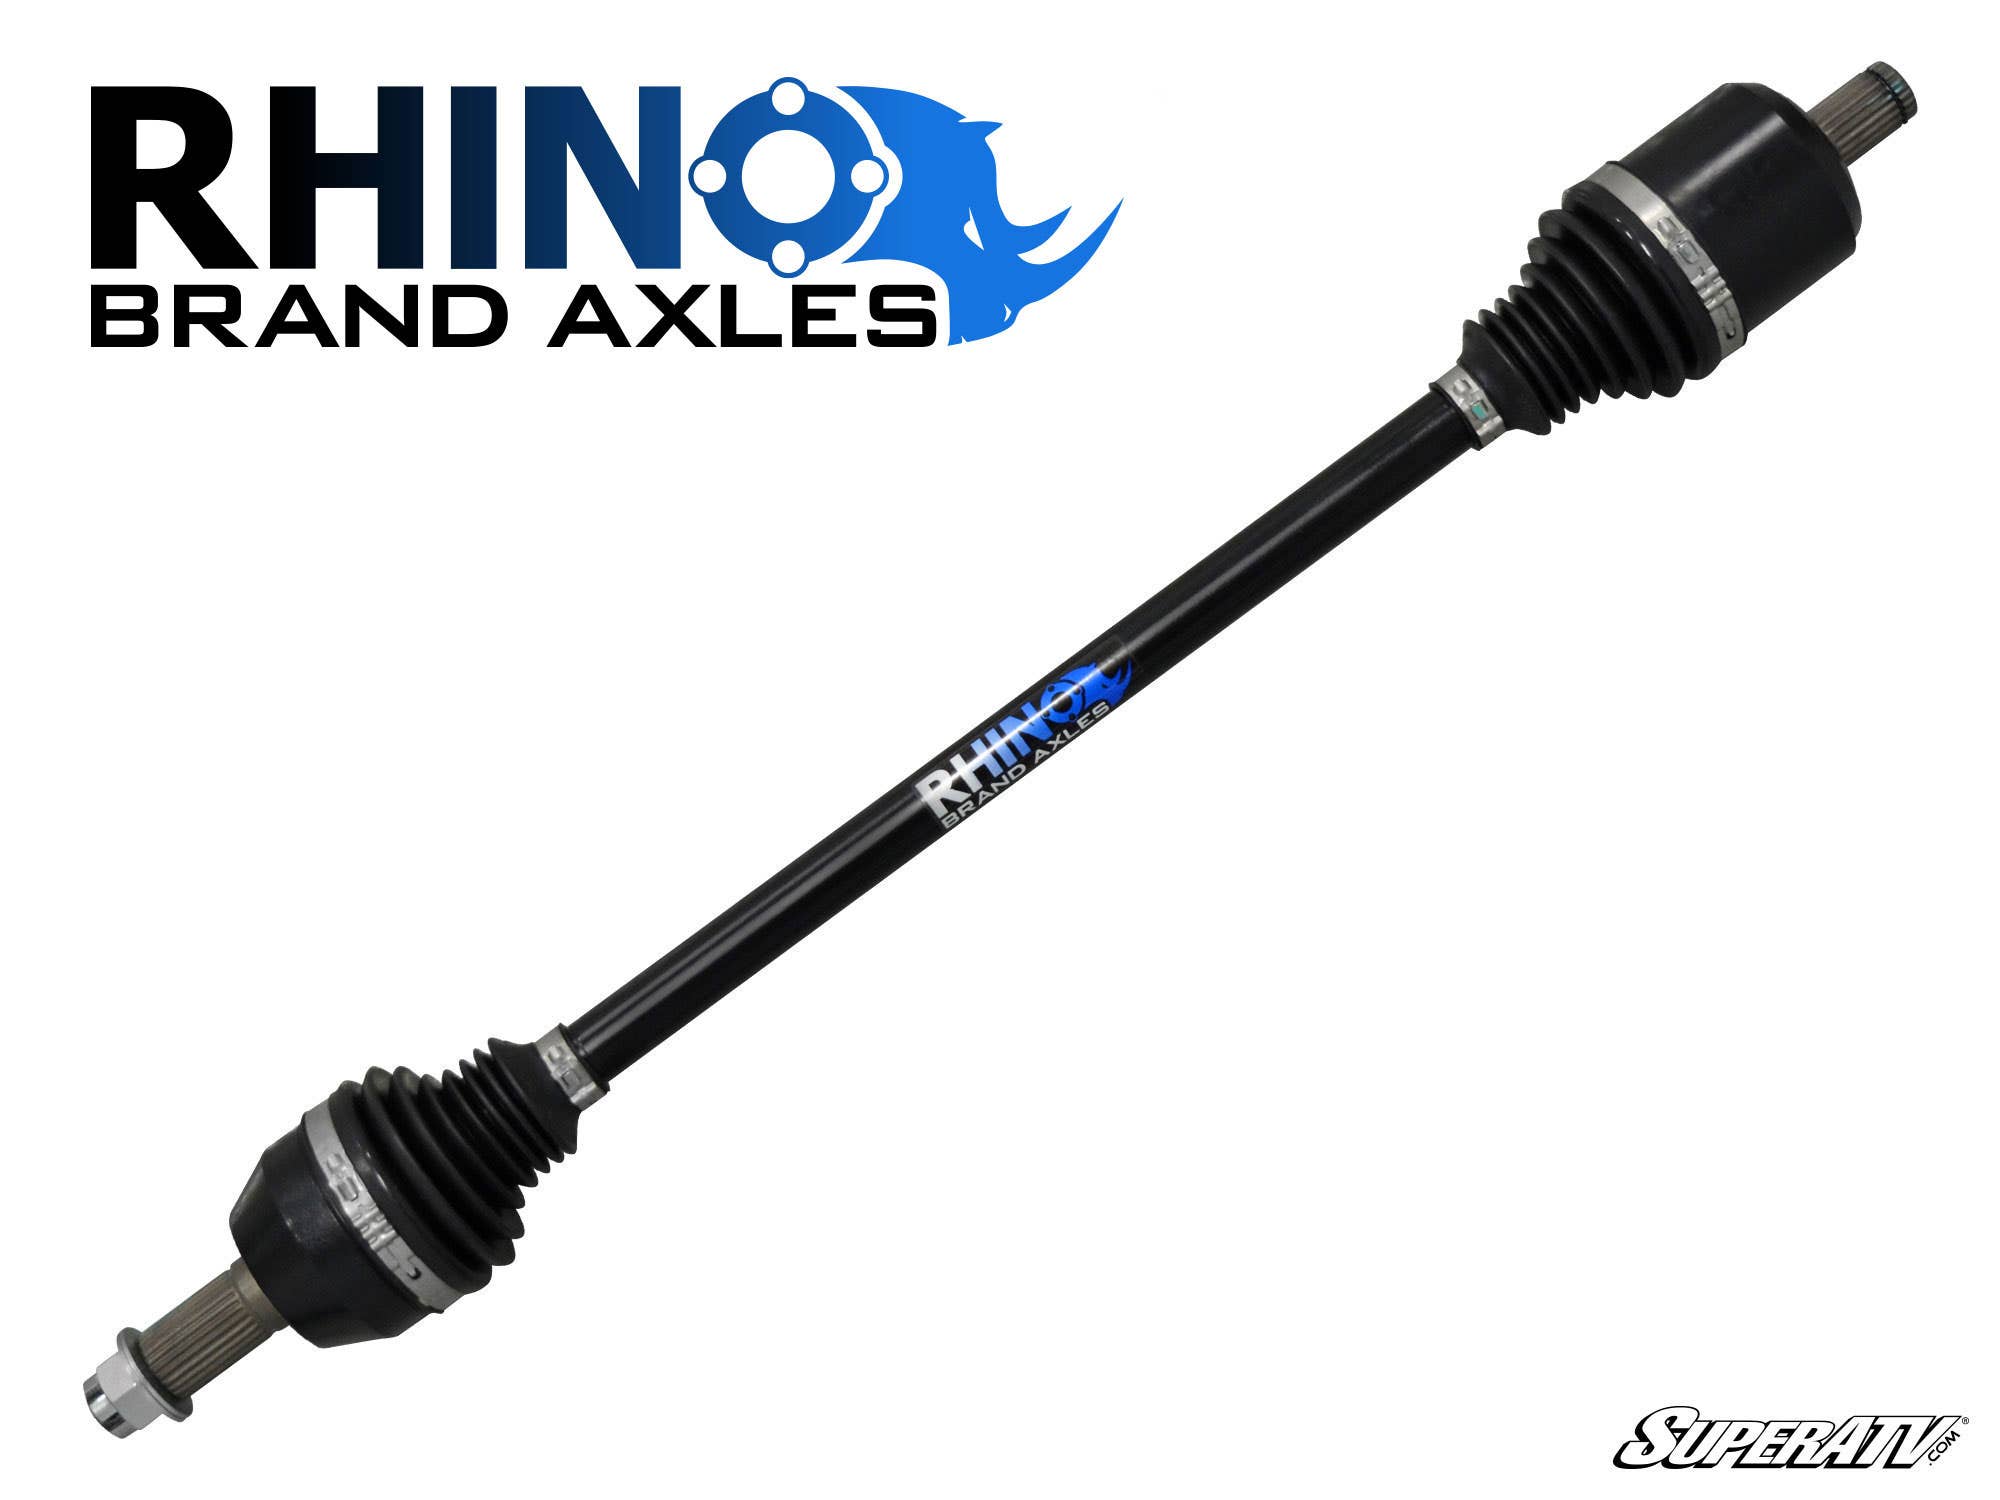 Polaris Ranger Midsize (2015+) Axle—Rhino Brand